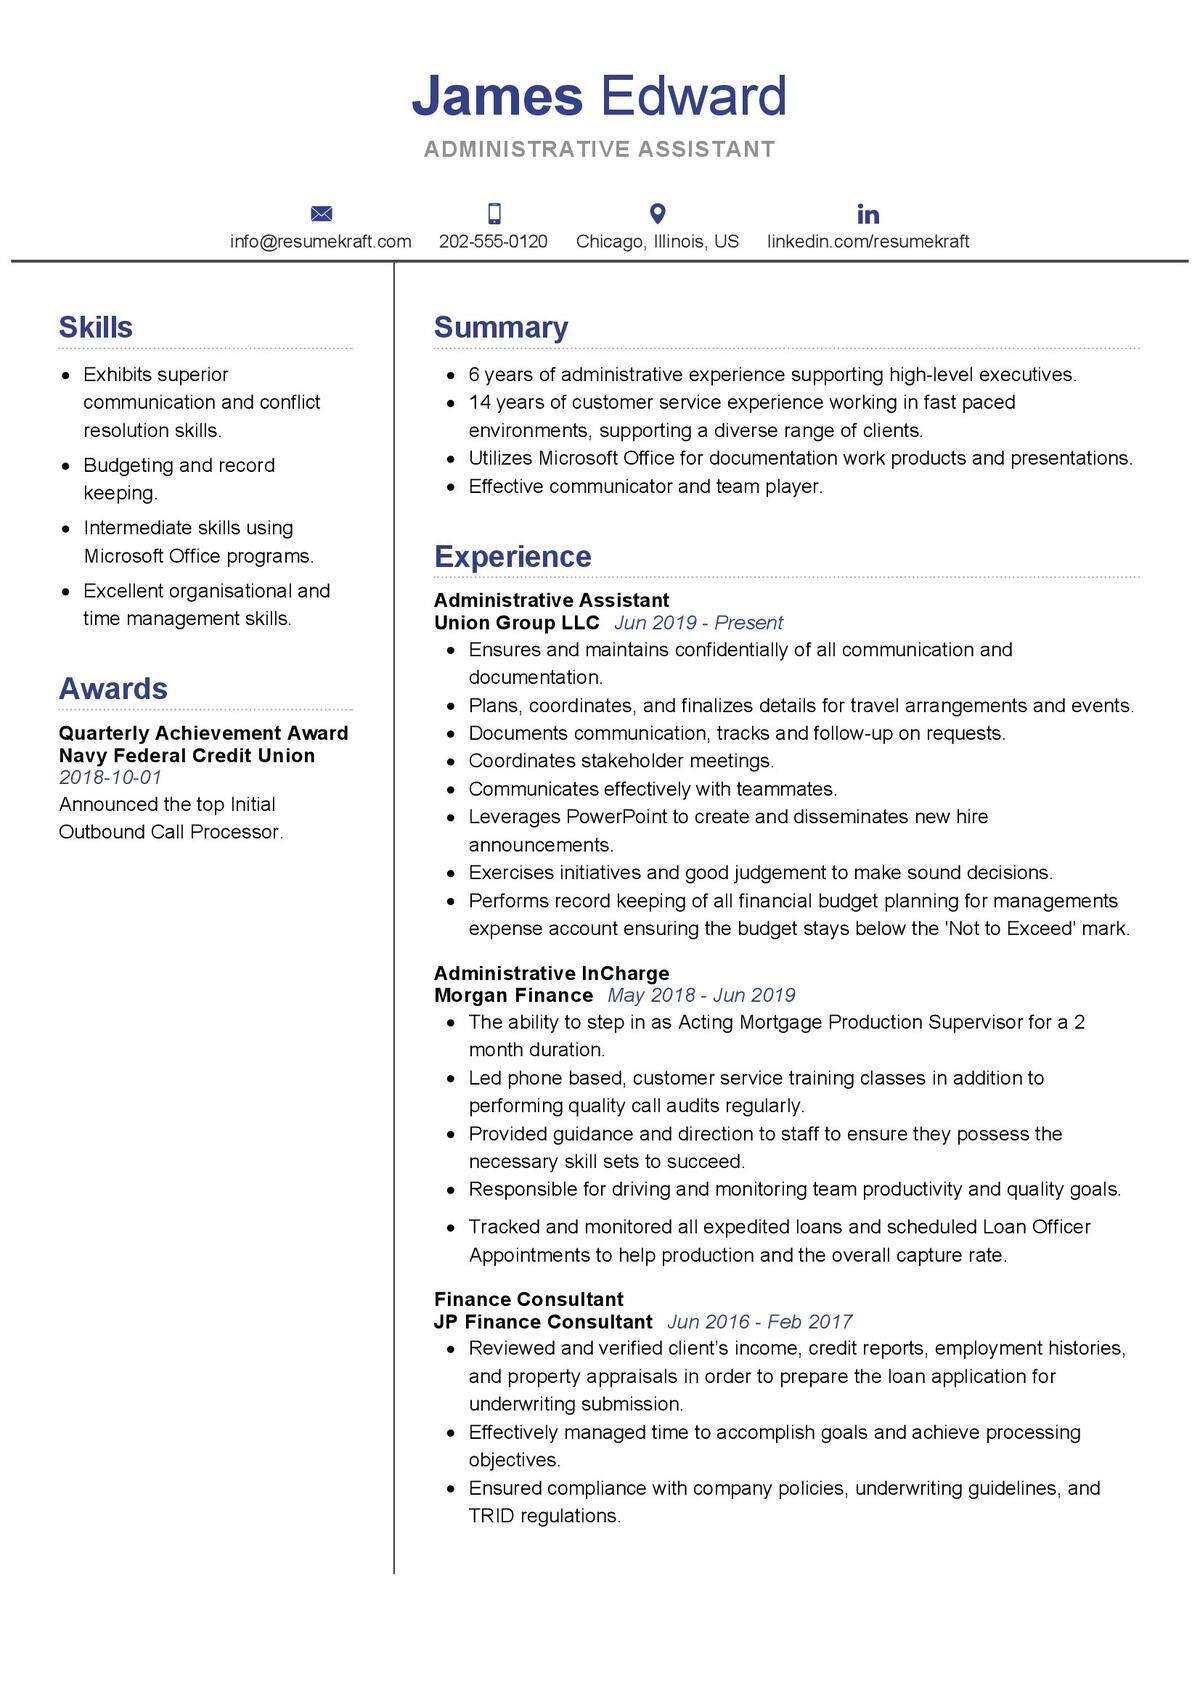 Sample Resume format for Administrative assistant Administrative assistant Resume Sample 2021 Writing Guide …